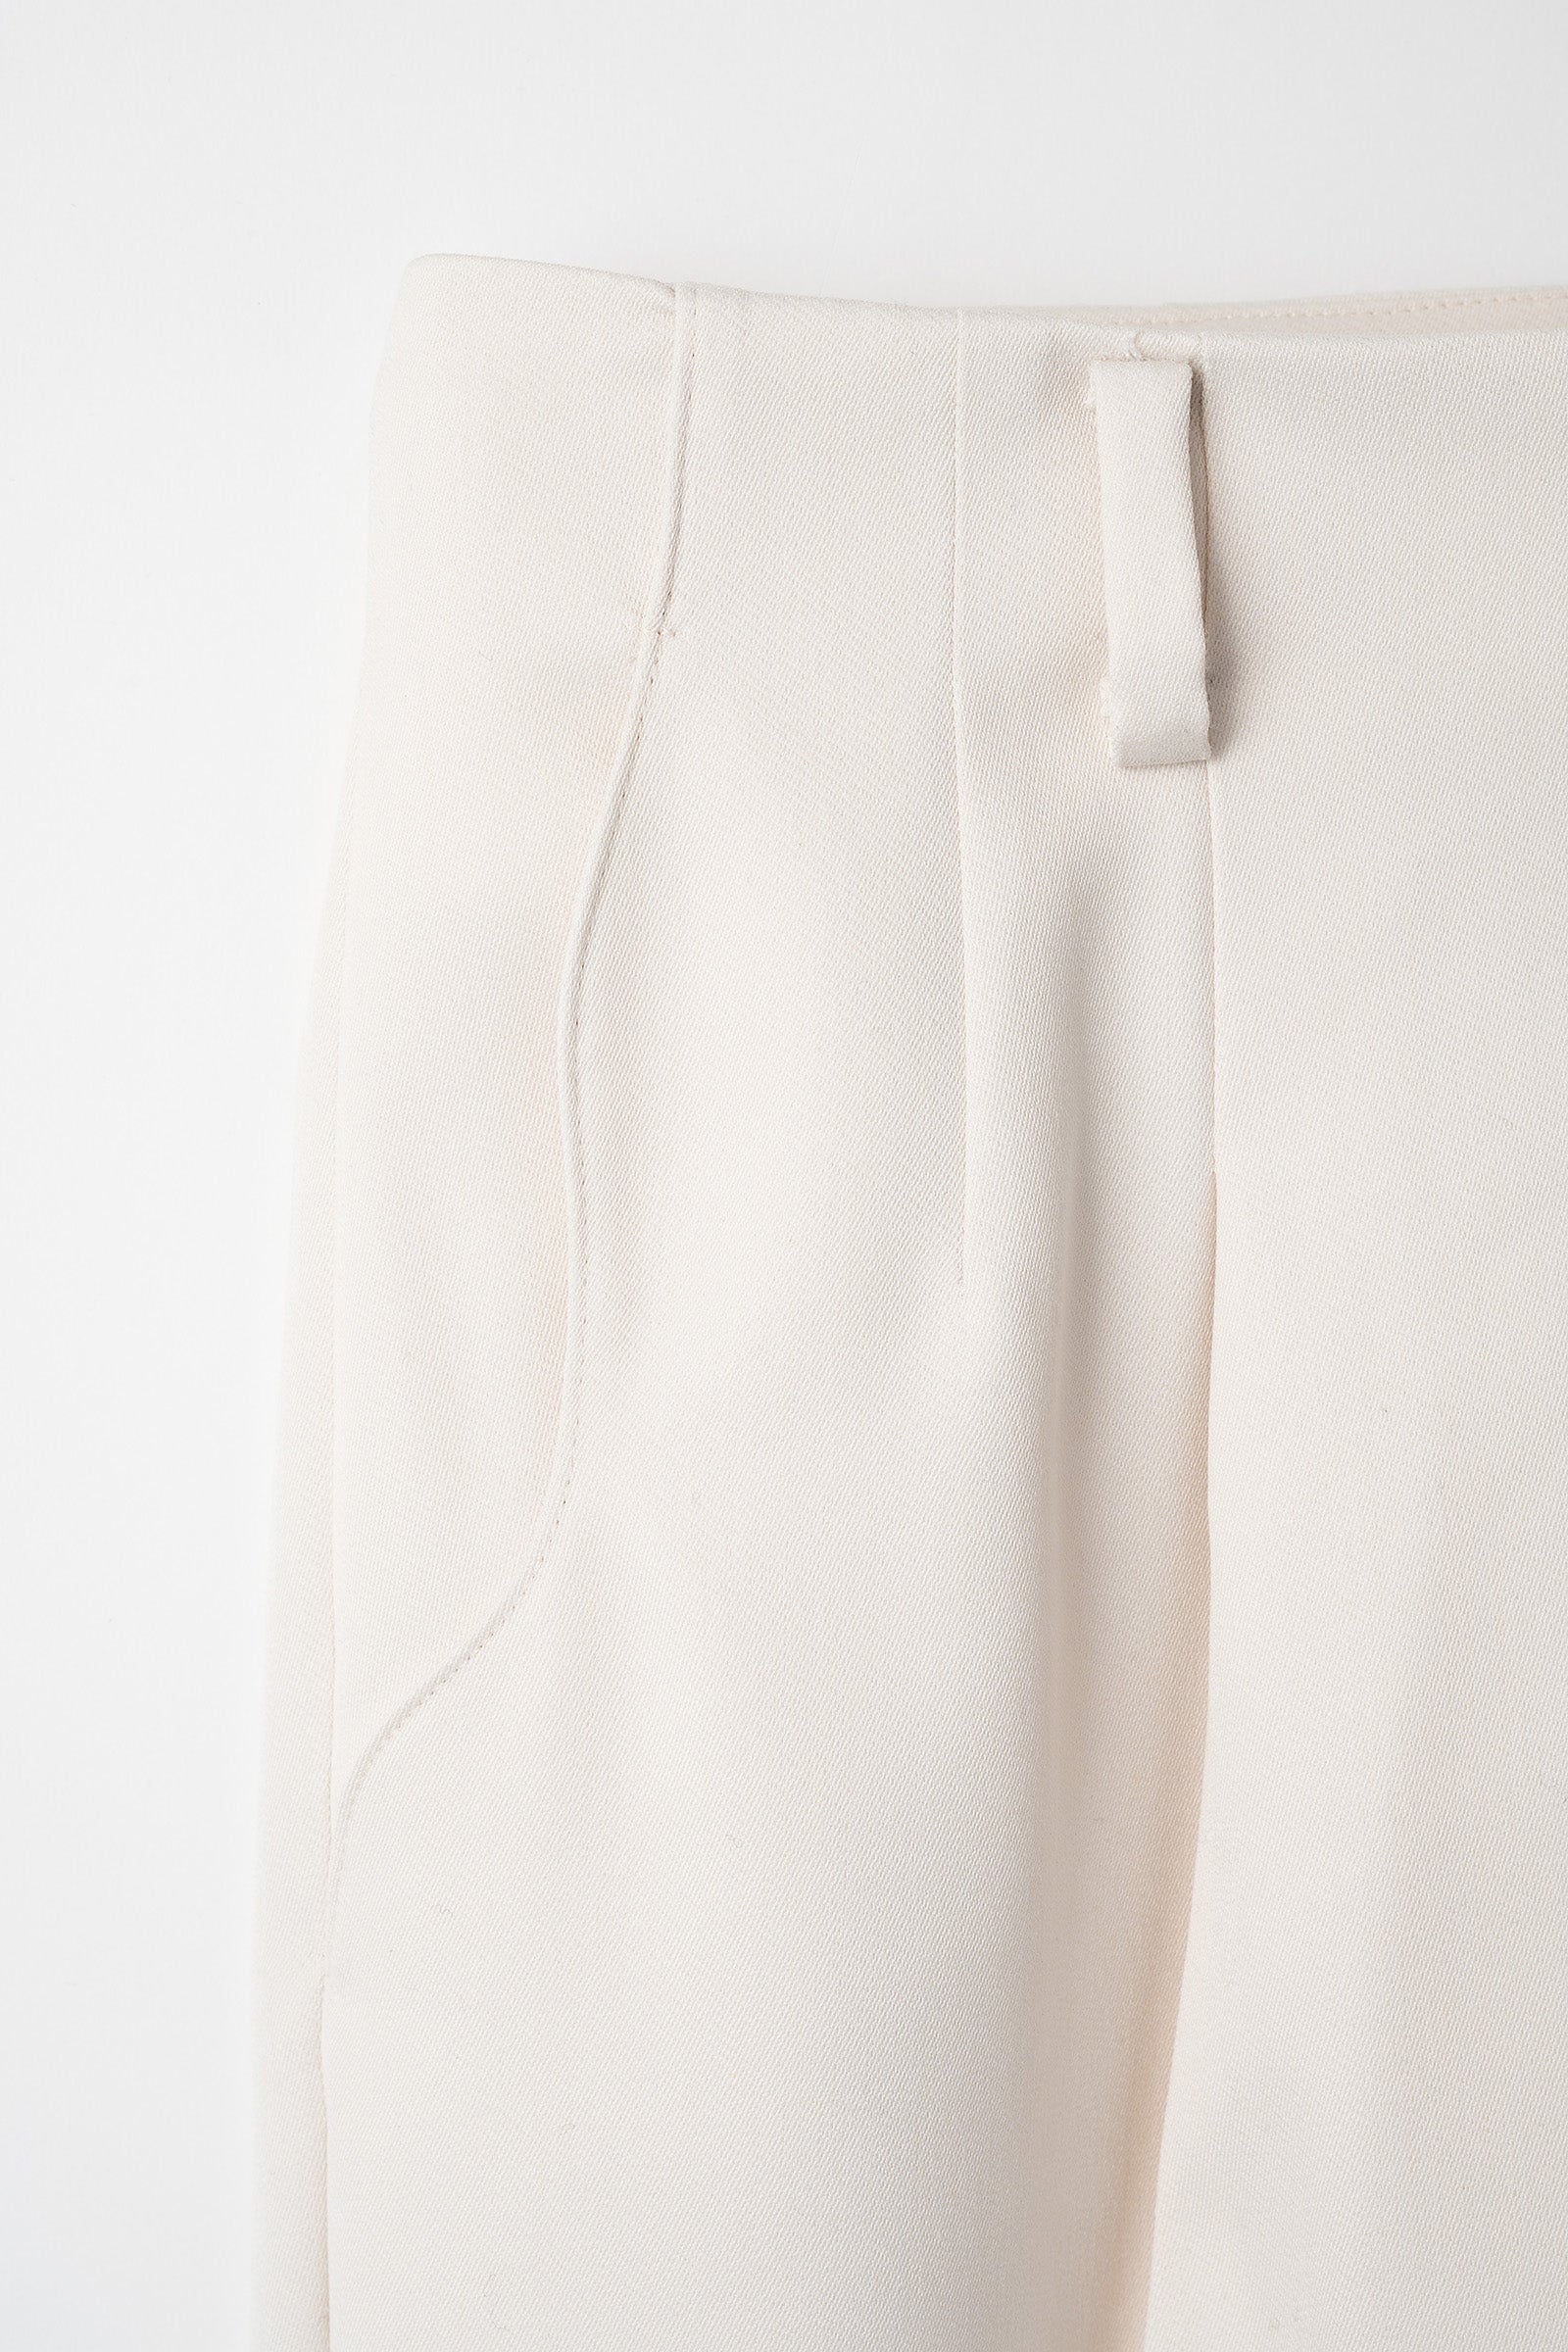 Melt trousers (White)